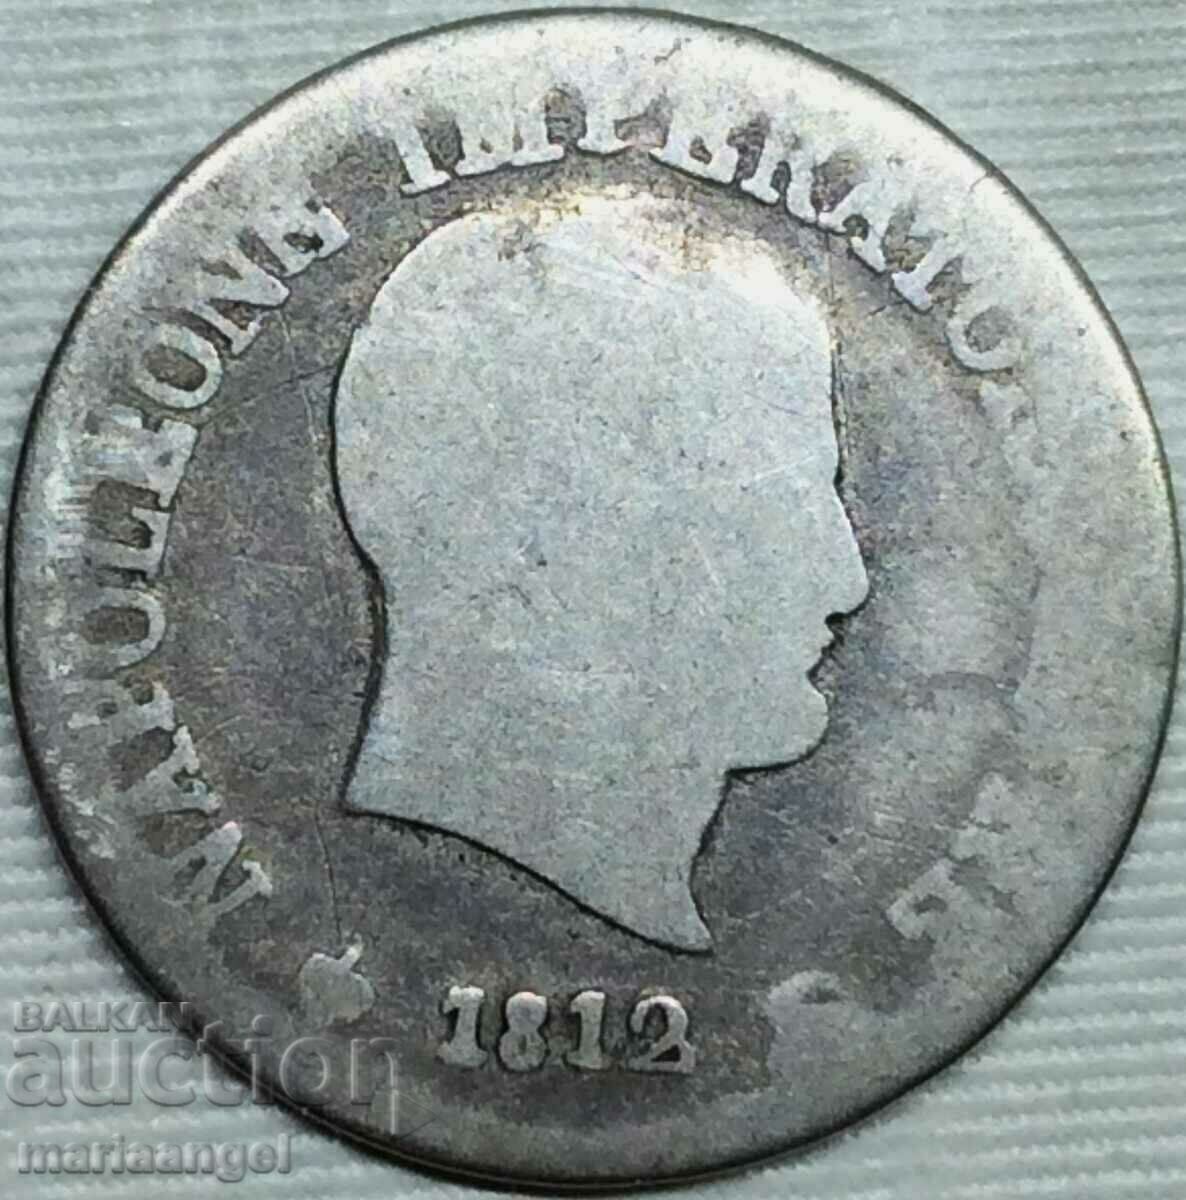 Napoleon 10 soldi 1812 Italy M - Milan silver - rare